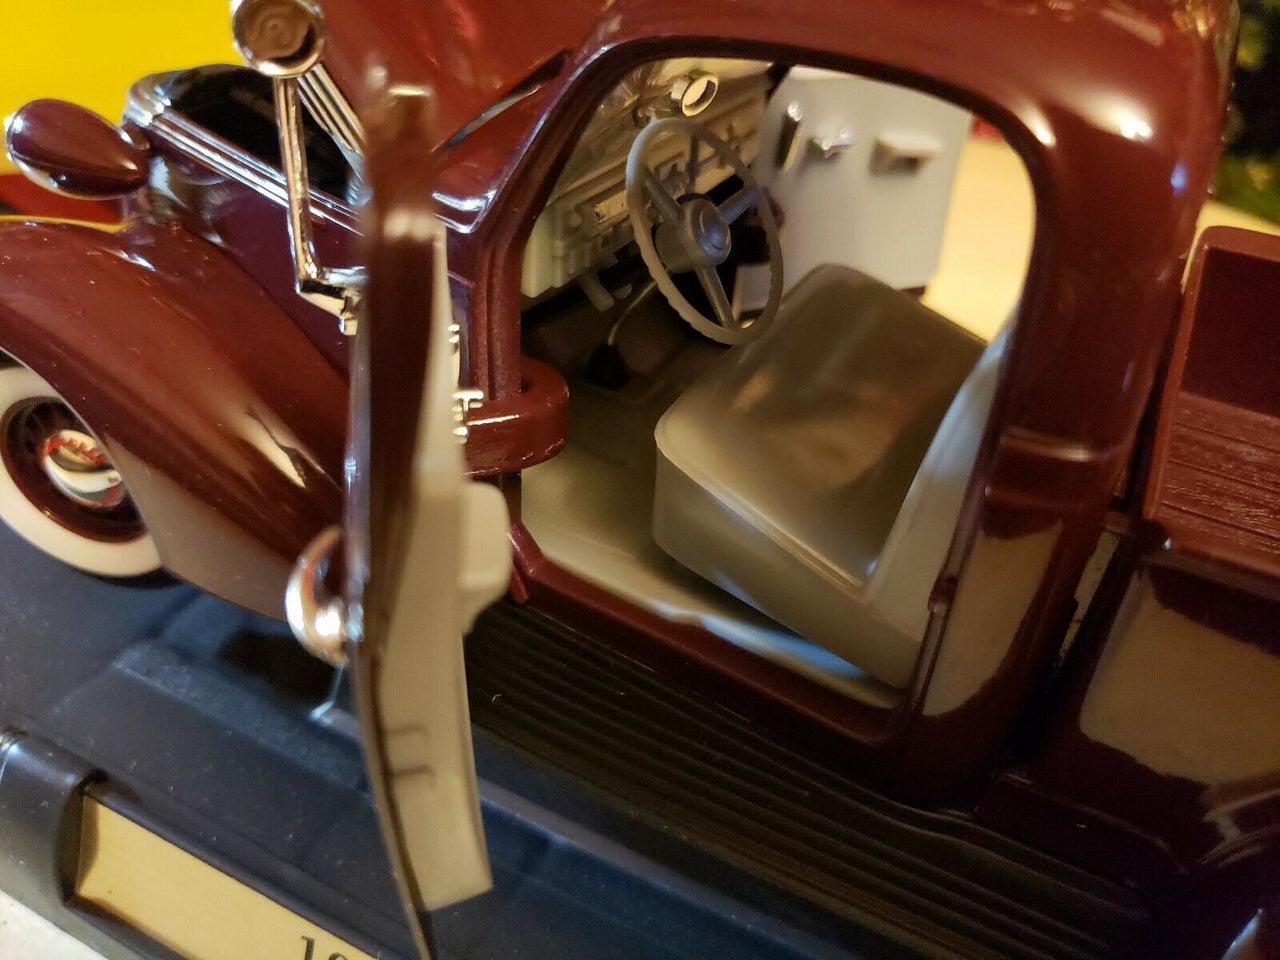 92458 Camioneta Studebaker Coupe Express Pick Up Año 1937 Escala 1:18 (Road Signature Collection) - CAT SERVICE PERU S.A.C.